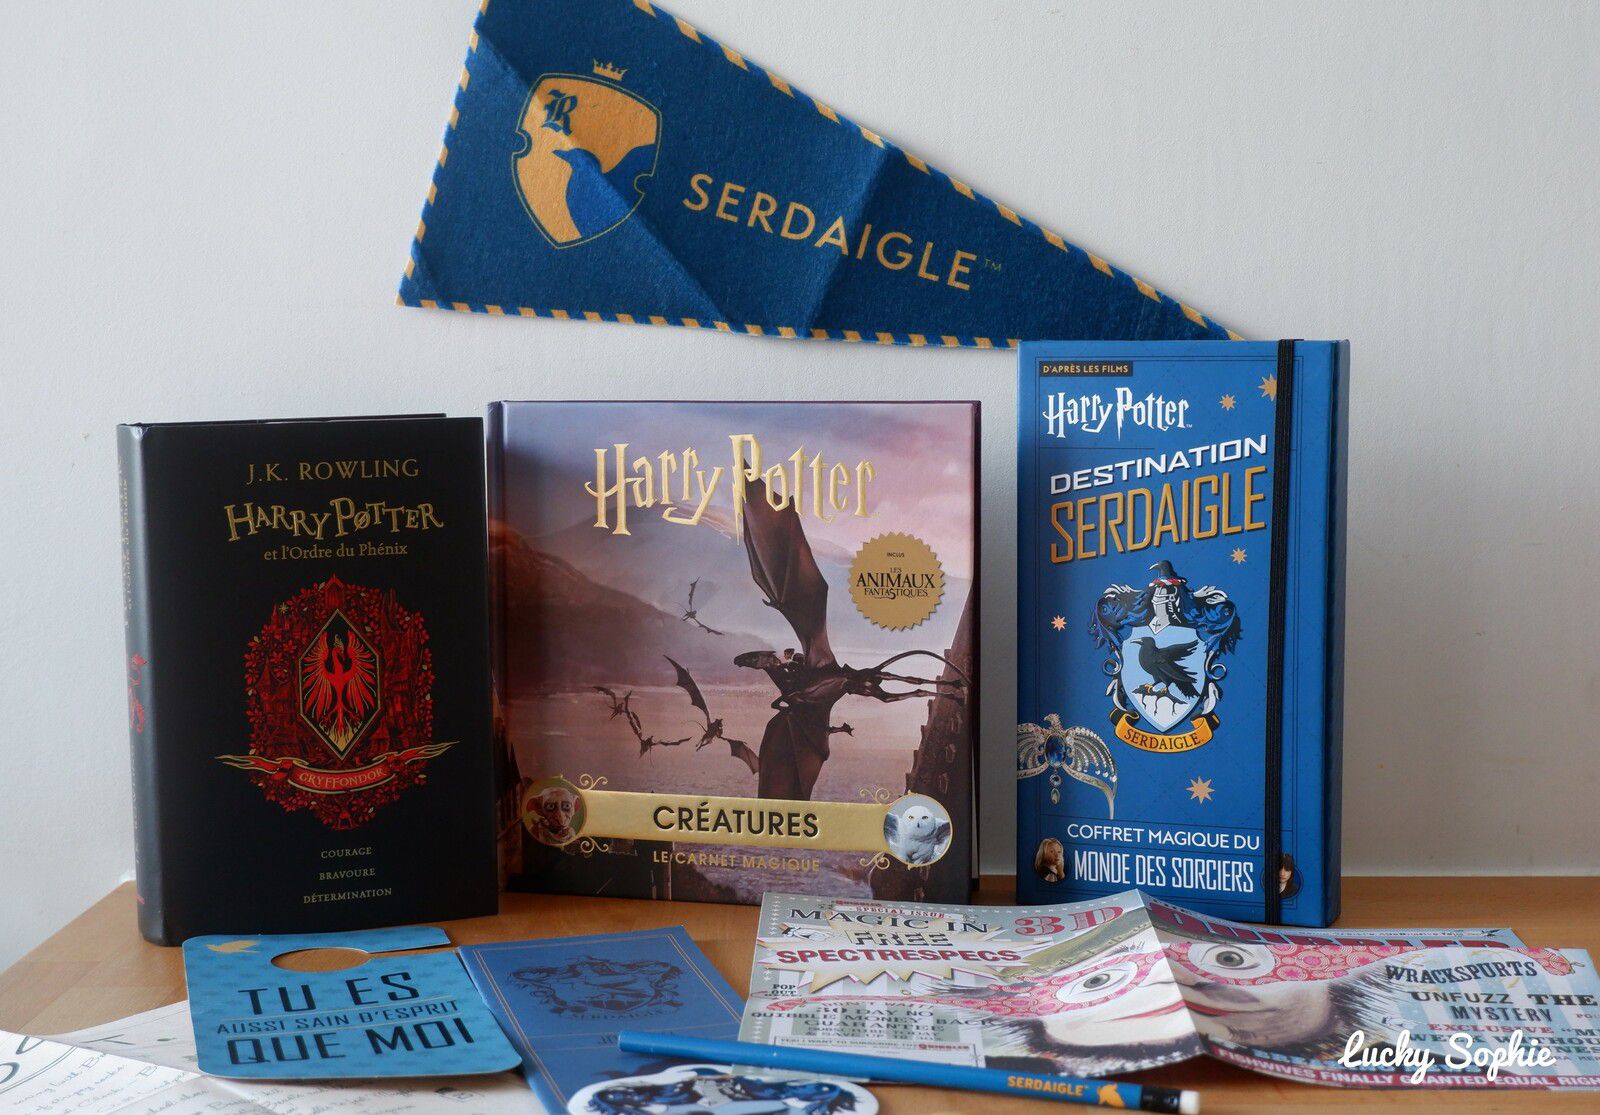 La Nuit des Livres Harry Potter 2022 - Lucky Sophie blog famille voyage